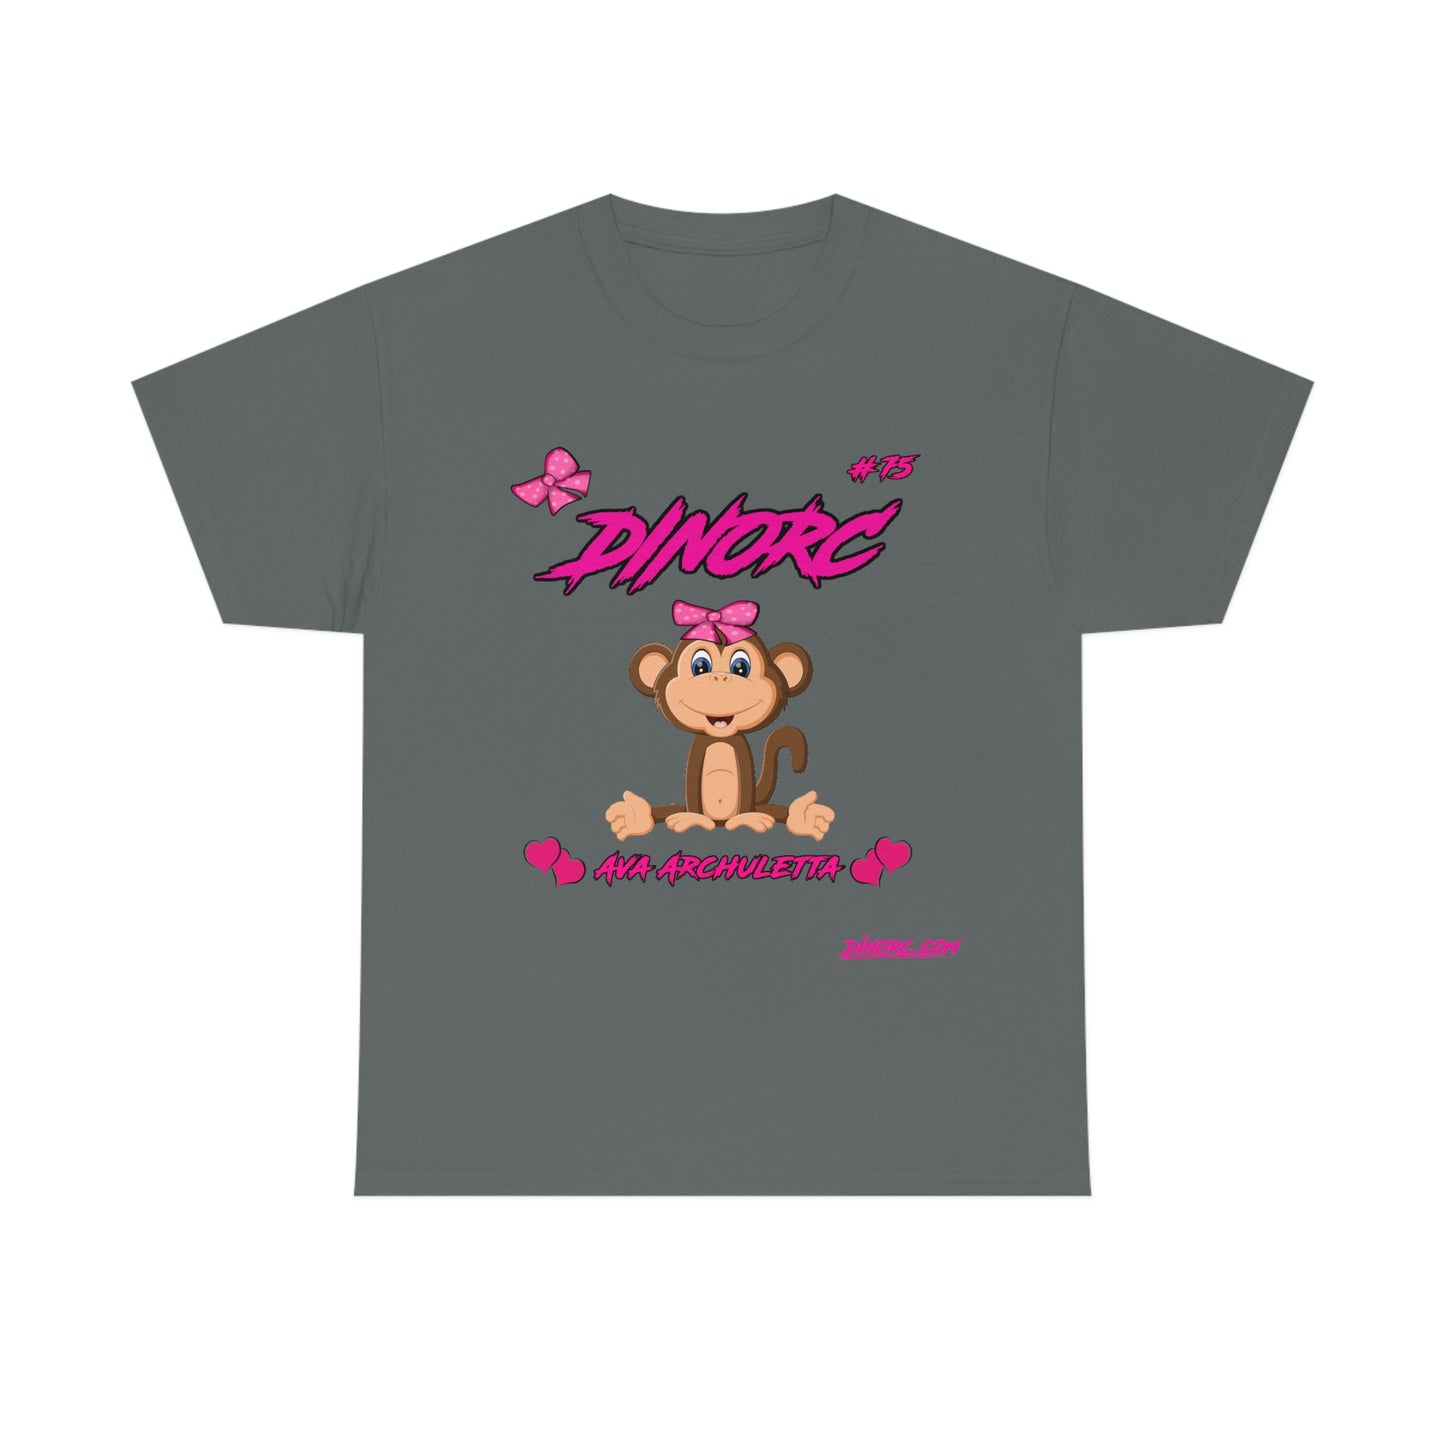 Ava Monkey Front DinoRc Logo T-Shirt S-5x